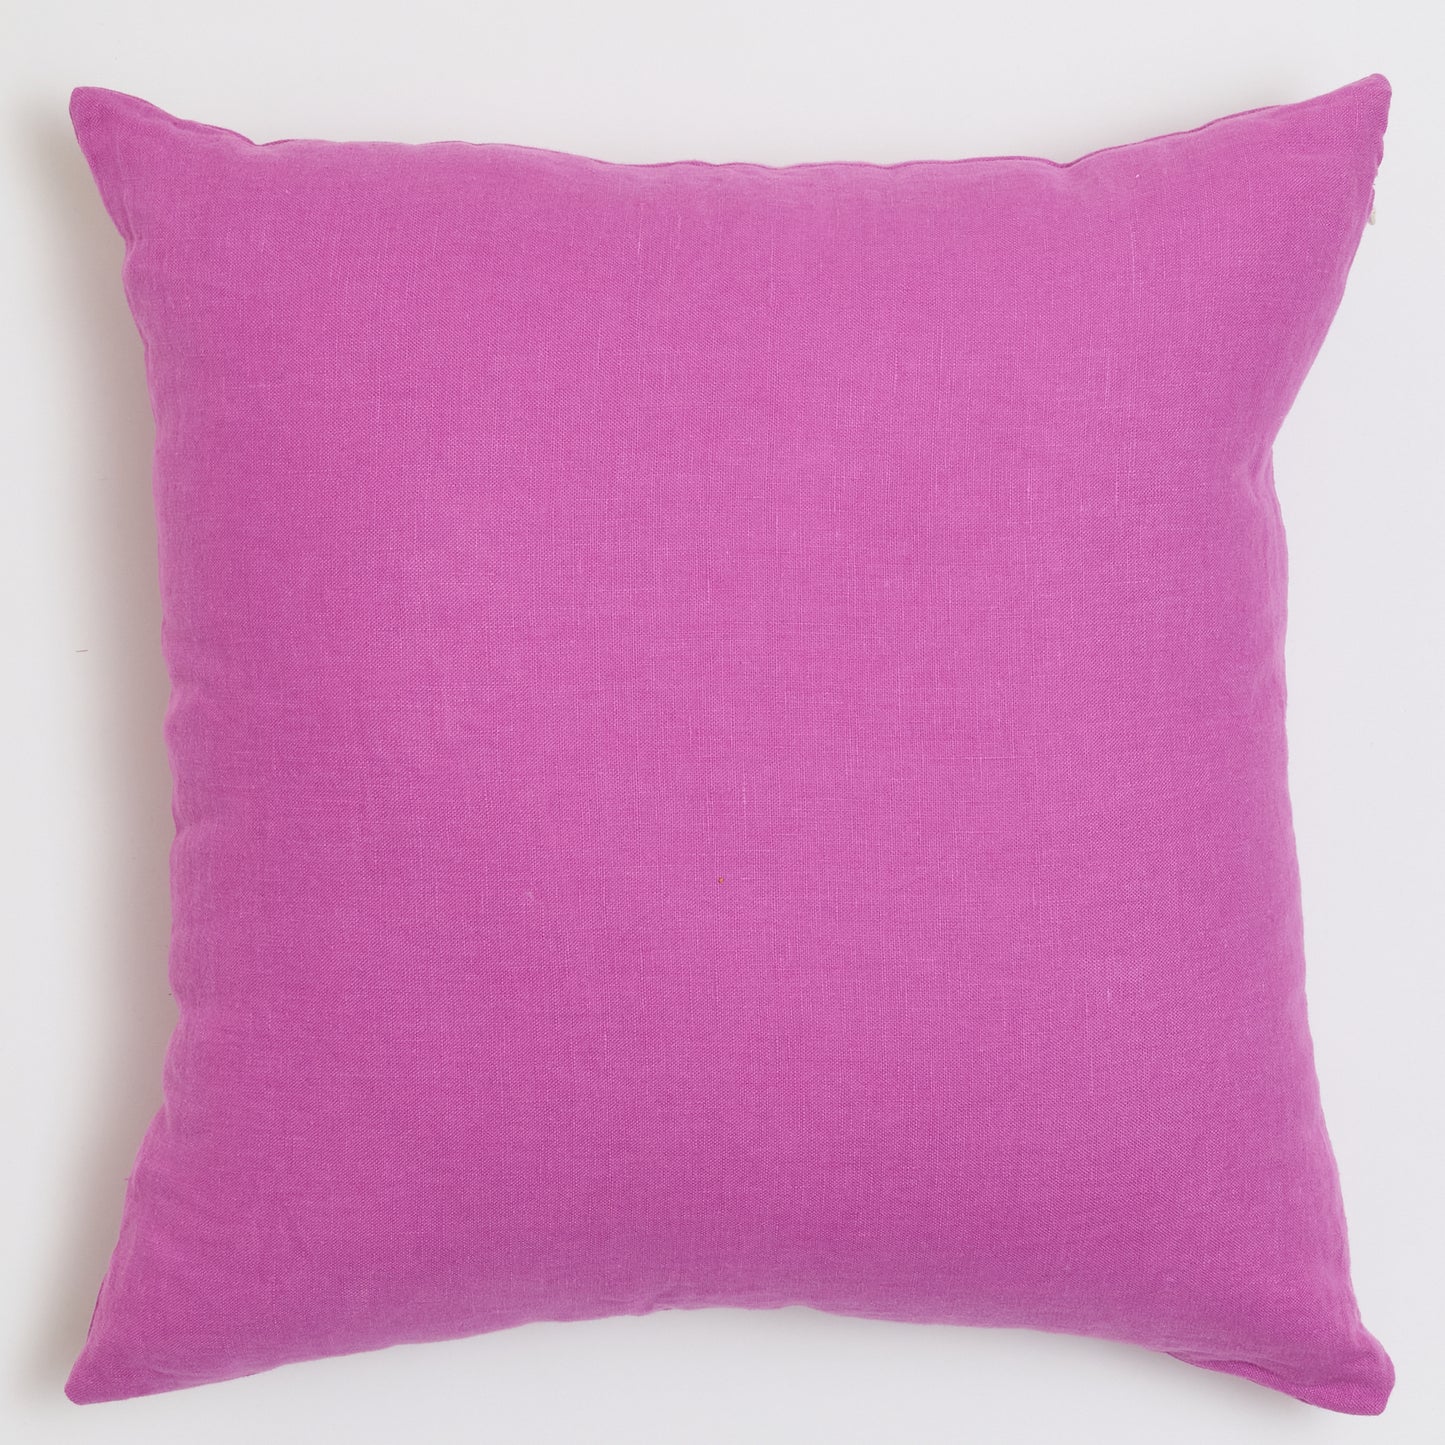 The Linen Large Throw Pillow 28"x28"